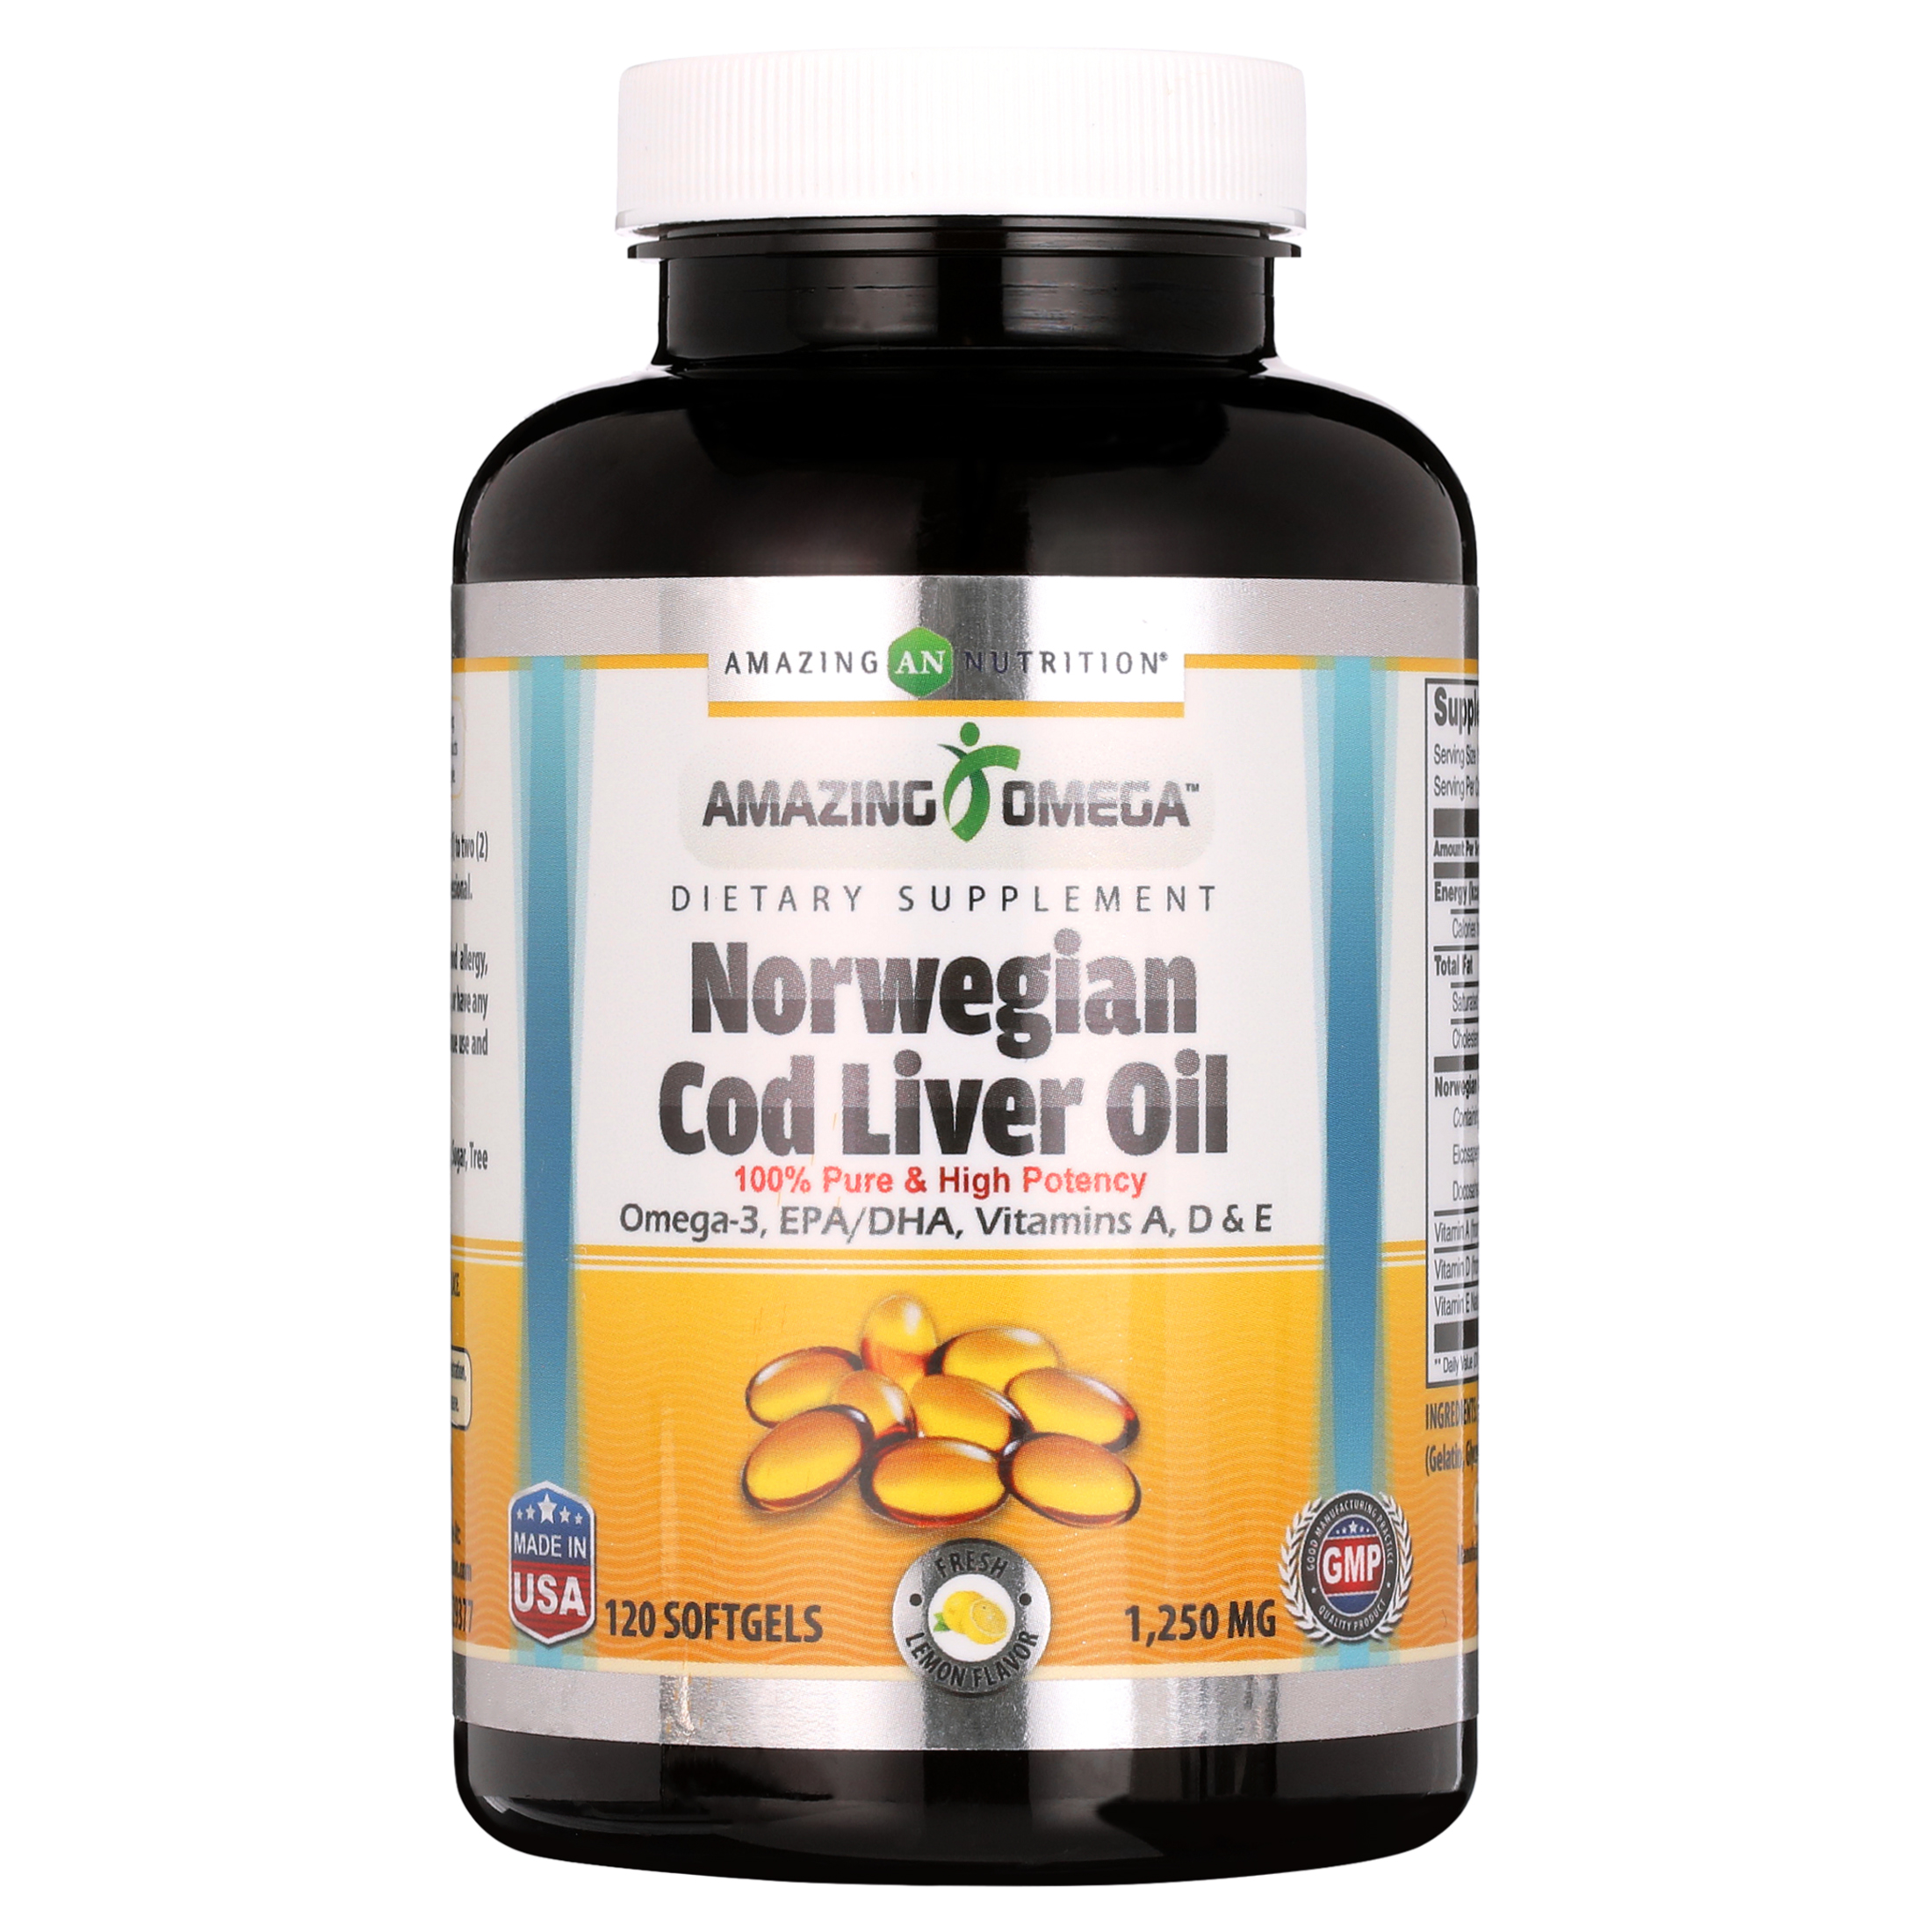 Amazing Omega Norwegian Cod Liver Oil 1250mg 120 Softgels - image 1 of 7